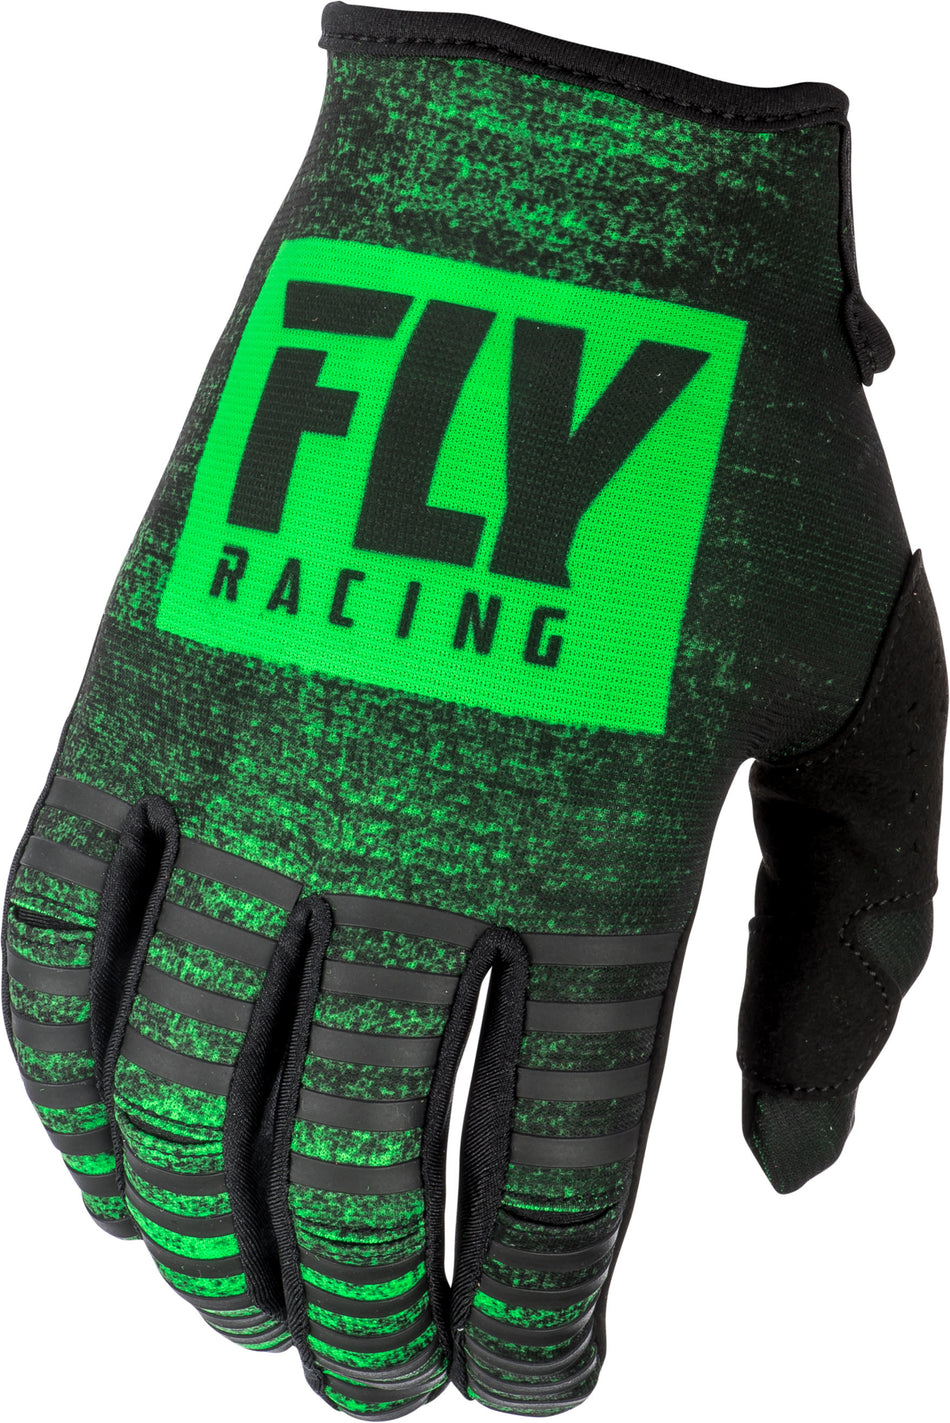 FLY RACING Kinetic Noiz Gloves Neon Green/Black Sz 12 372-51512